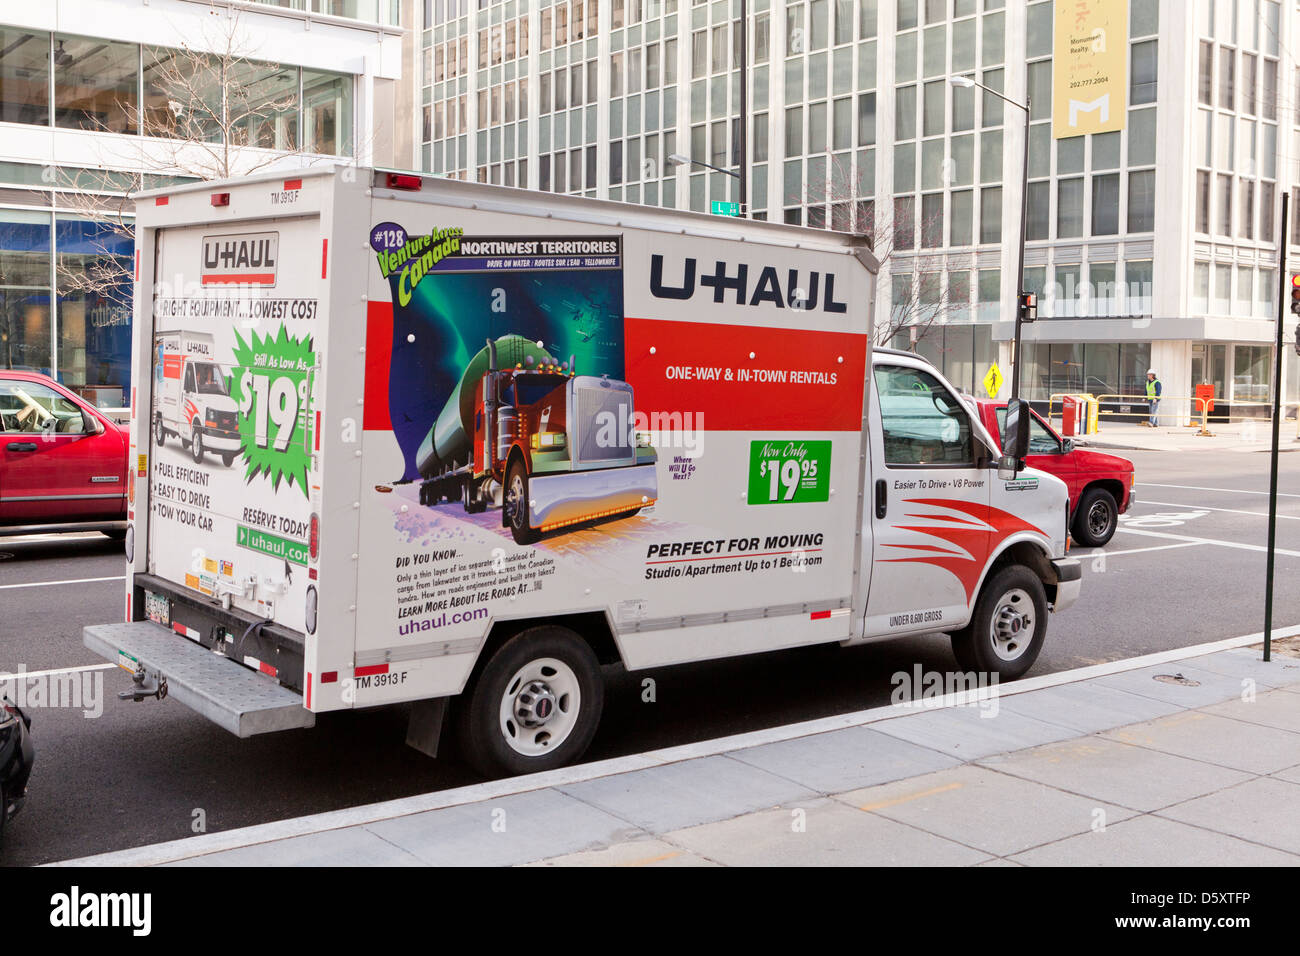 U-haul carrello in strada urbana - USA Foto Stock